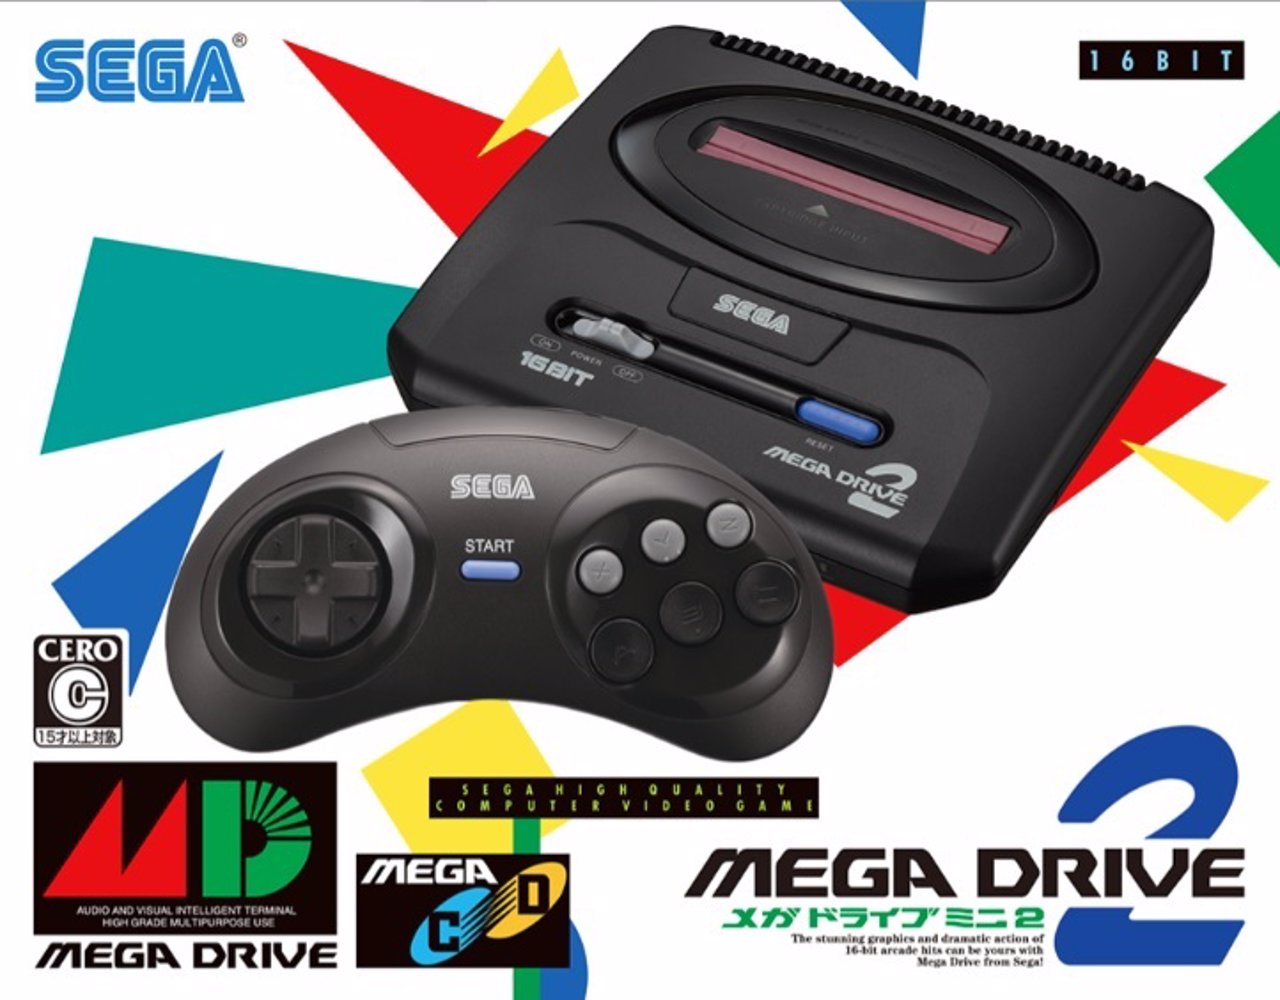 Sega anuncia la nueva Mega Drive Mini 2, que llegará con 50 juegos de Mega Drive y Mega CD